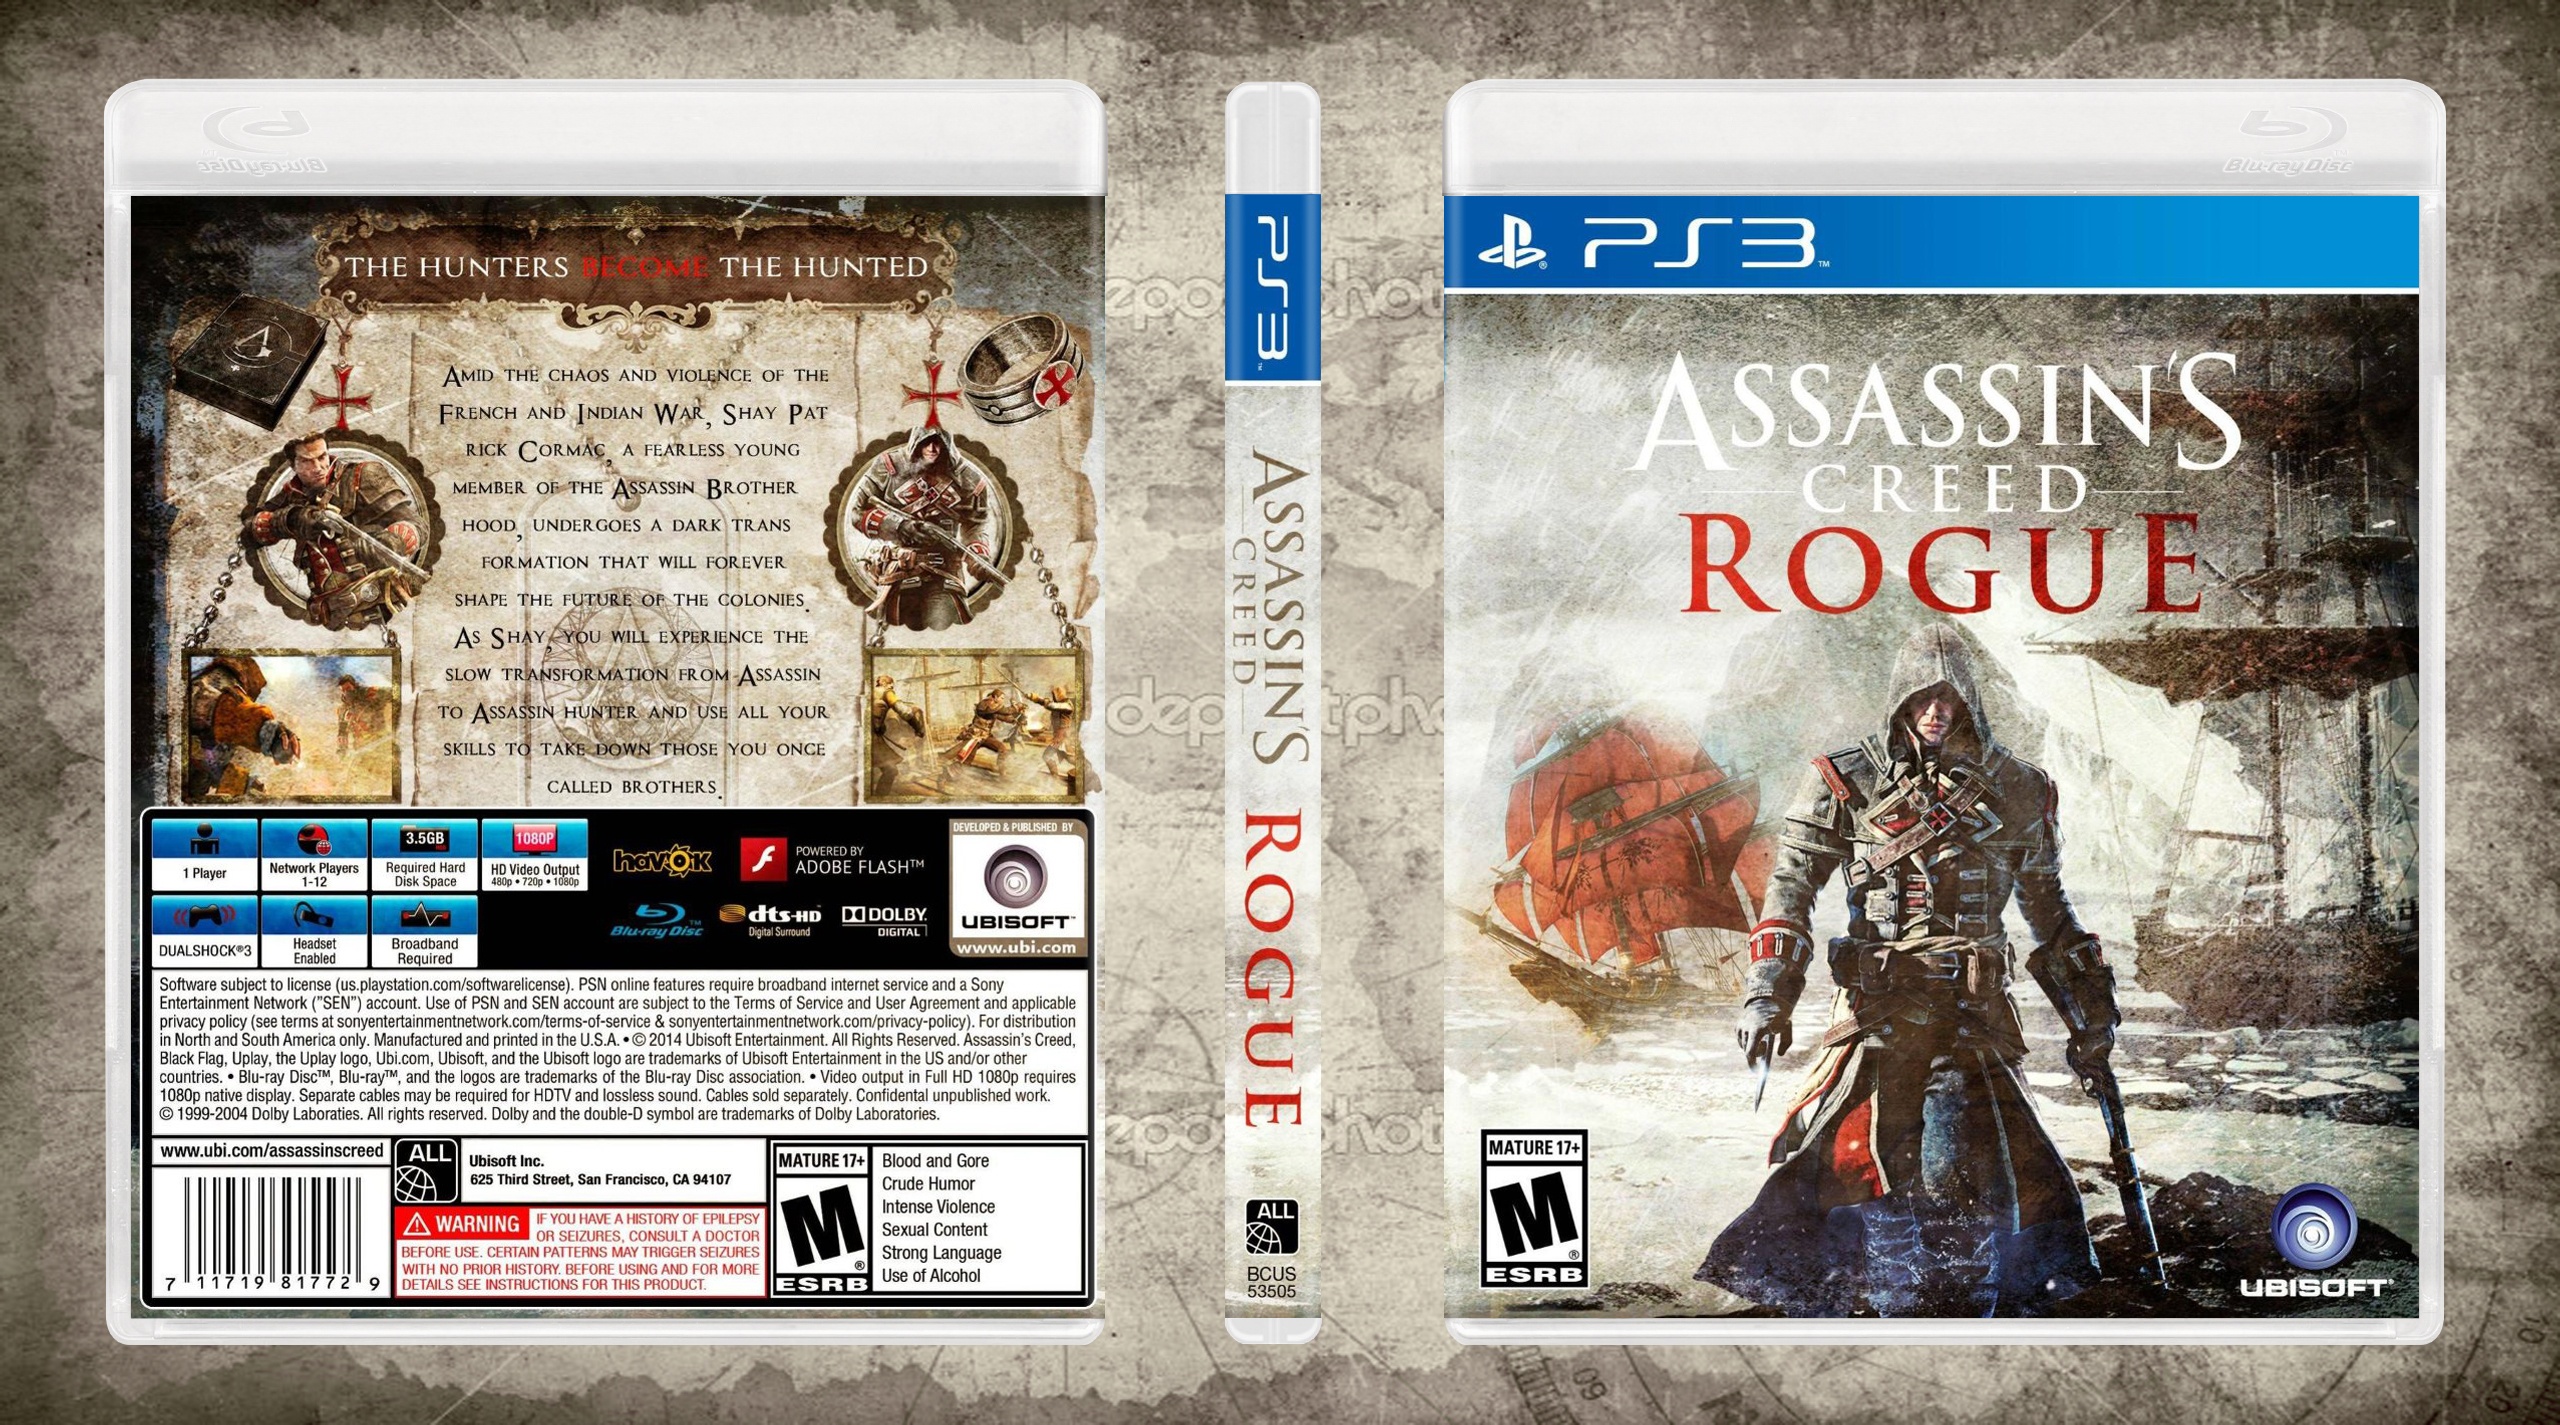 Assassin's Creed: Rogue box cover